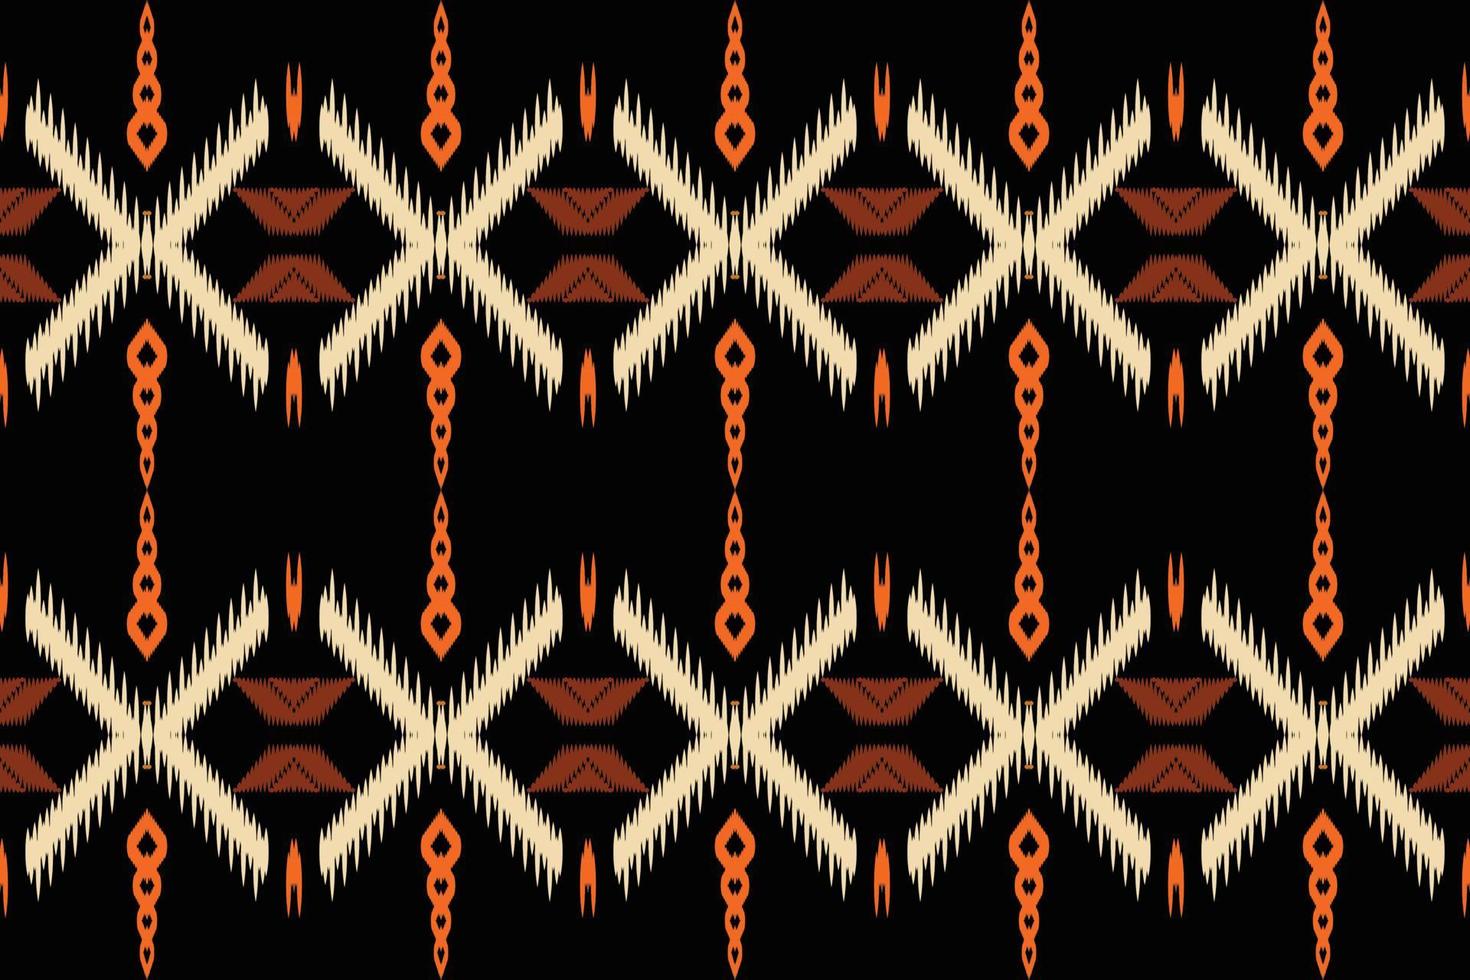 ikat tessuto tribale africano Borneo scandinavo batik boemo struttura digitale vettore design per Stampa saree Kurti tessuto spazzola simboli campioni